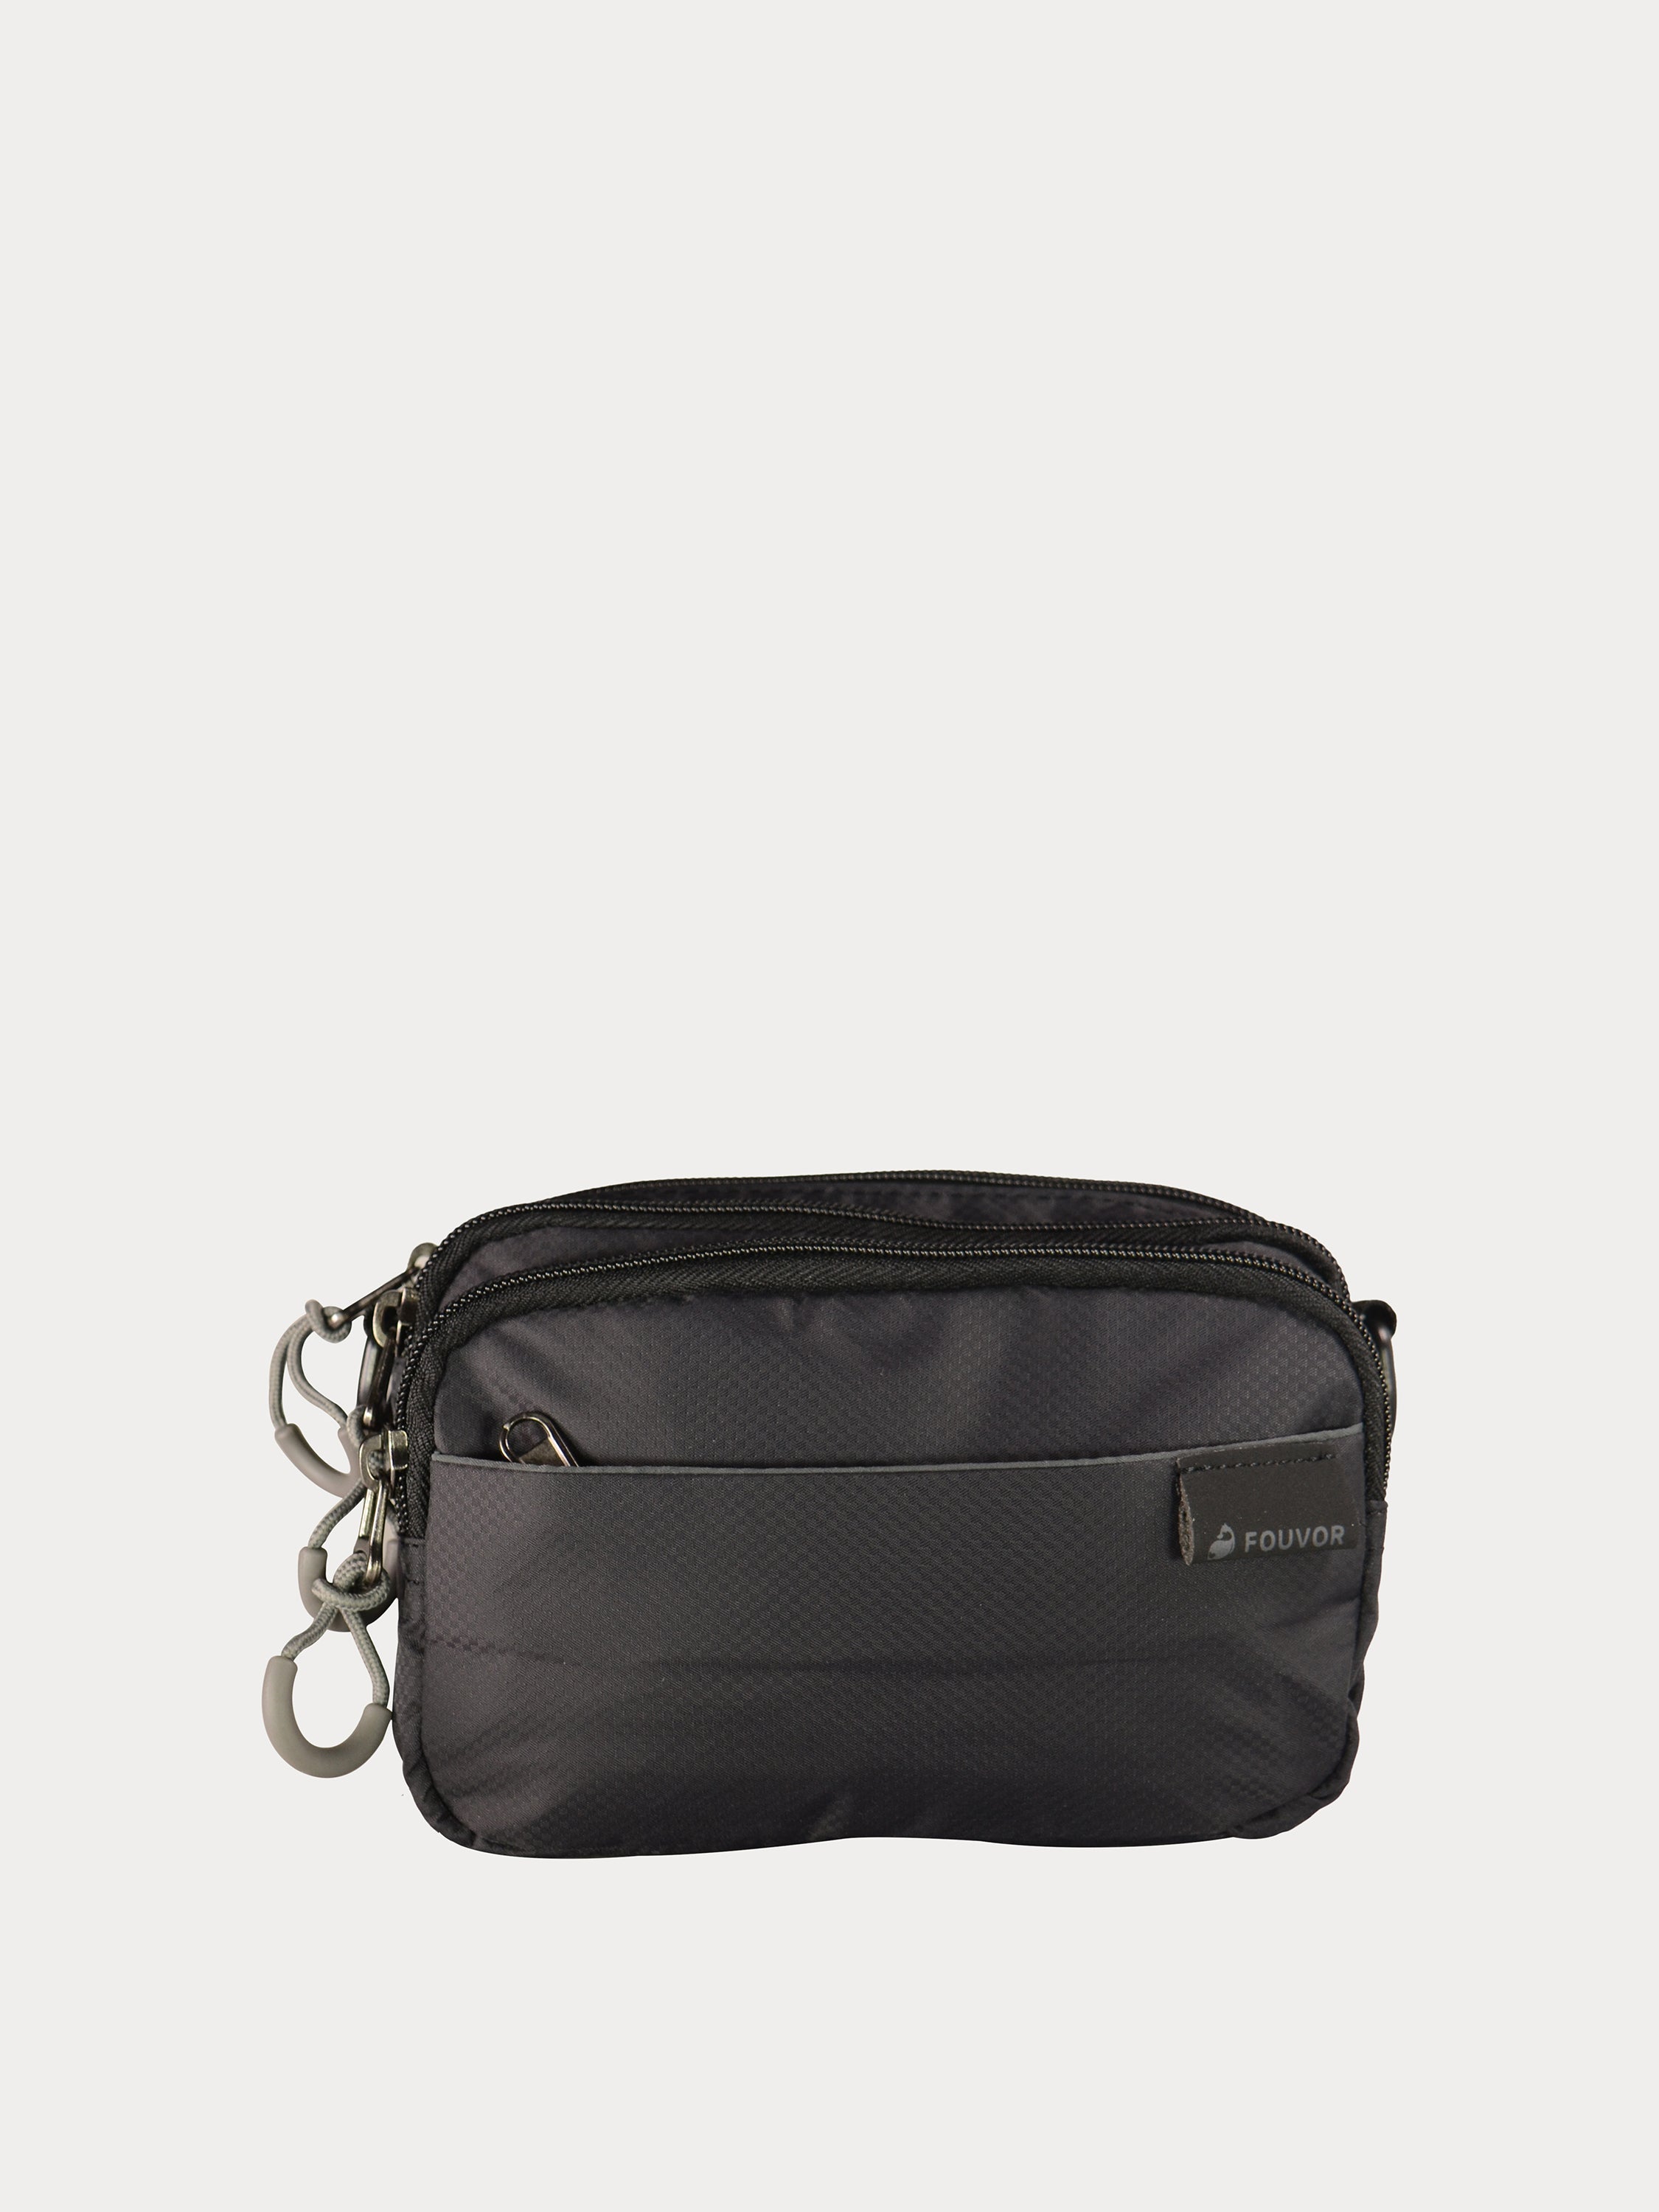 Fouvor Multi Pocket Waist Bag